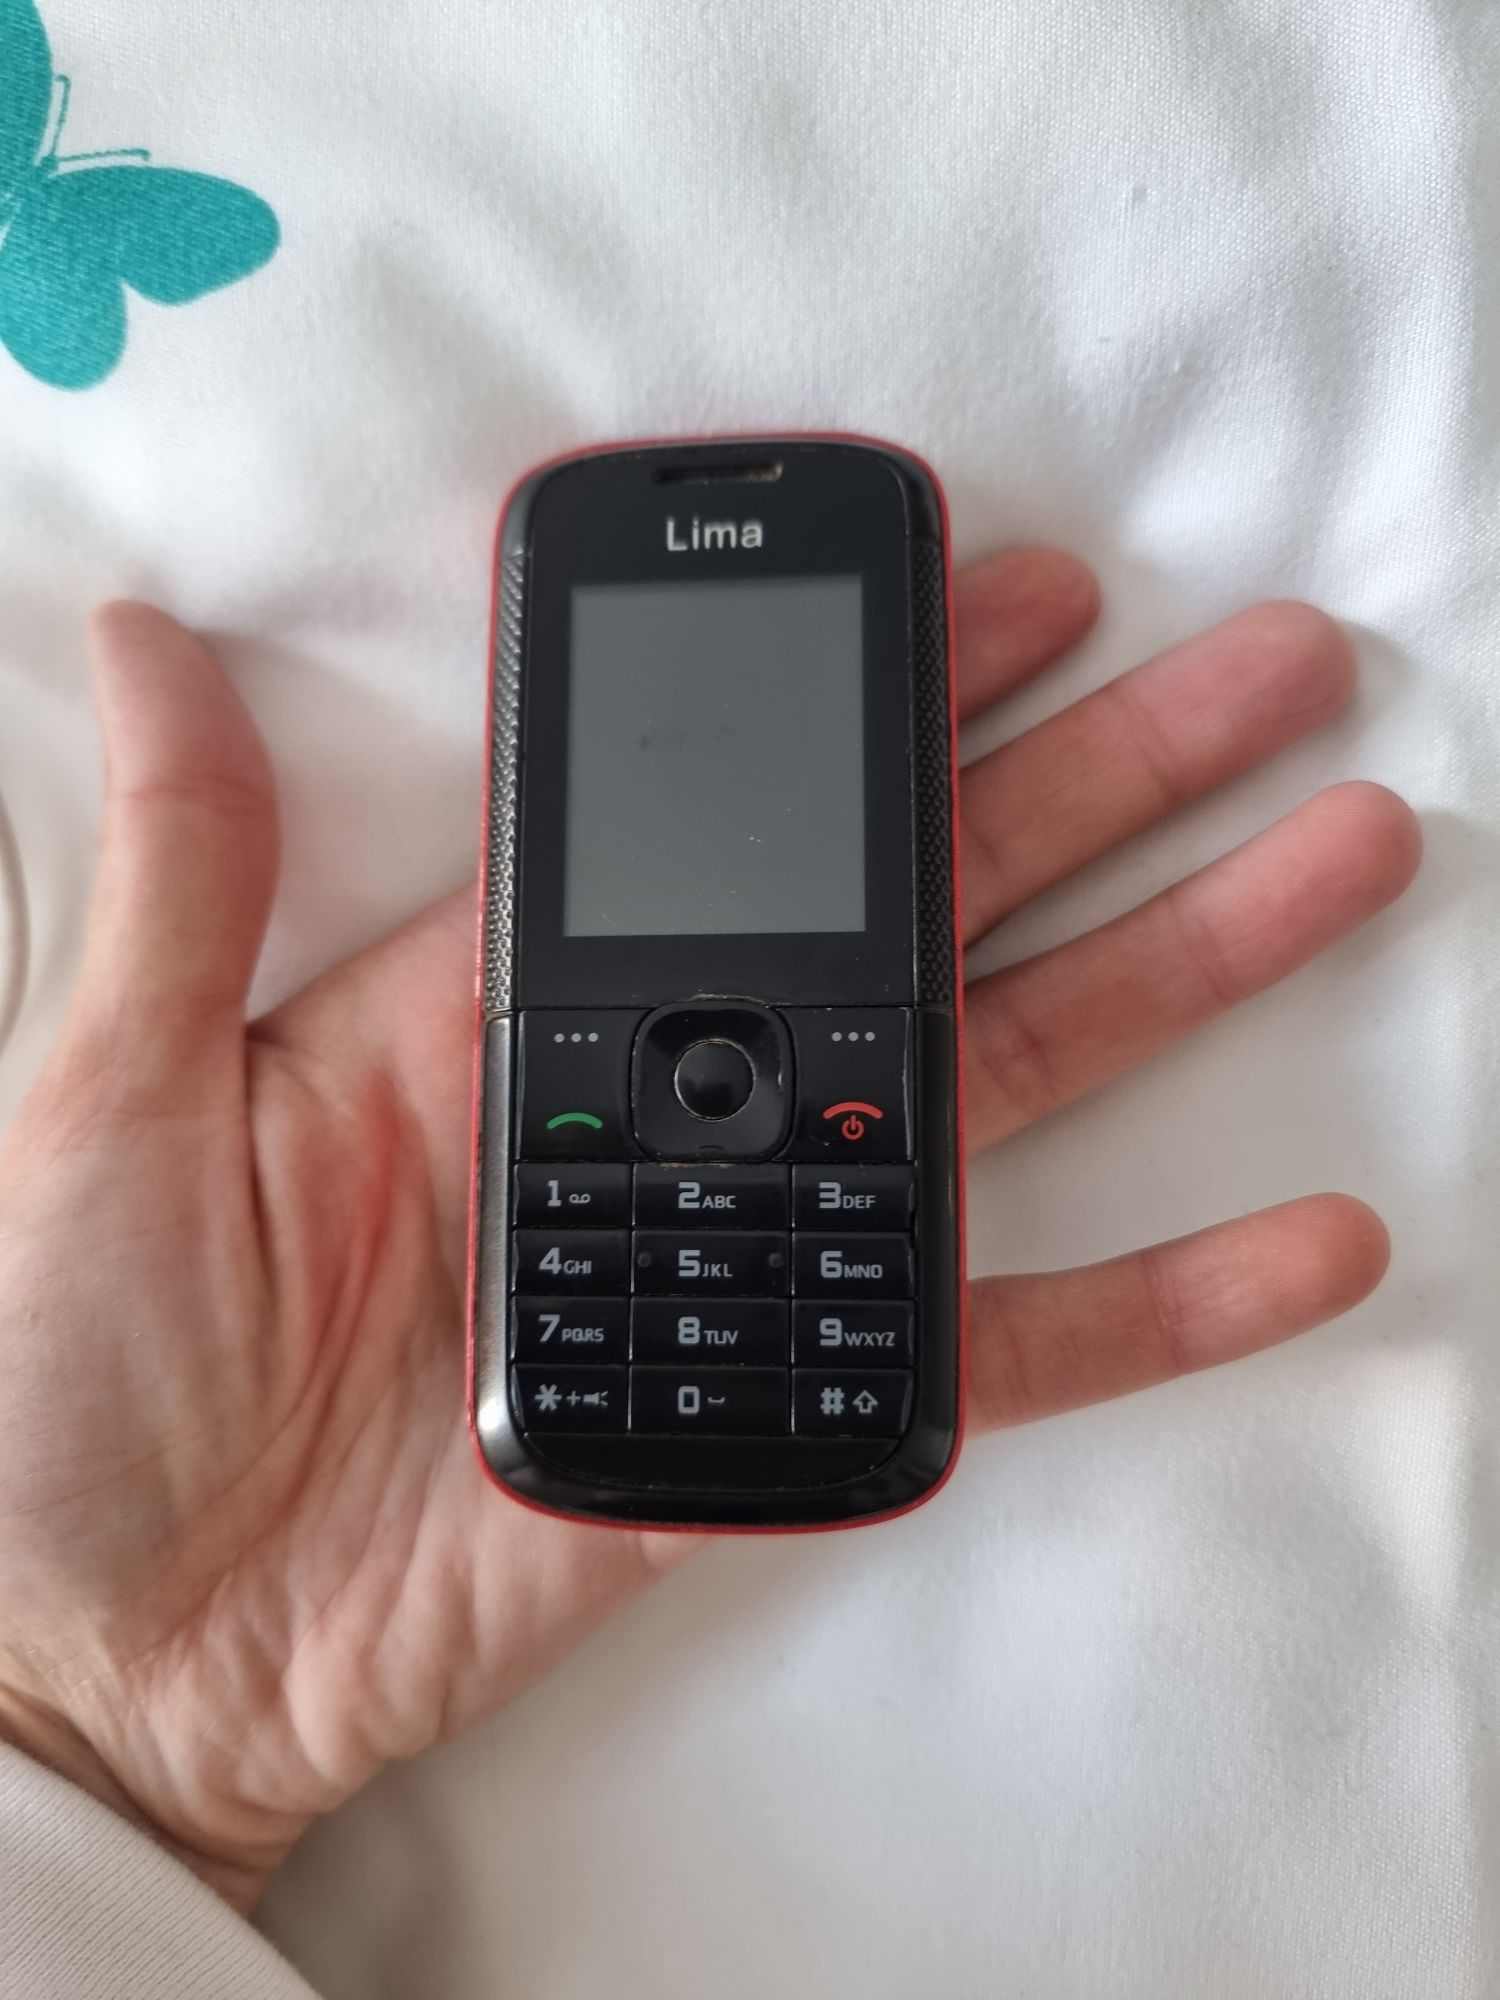 Telefon Lima dual sim